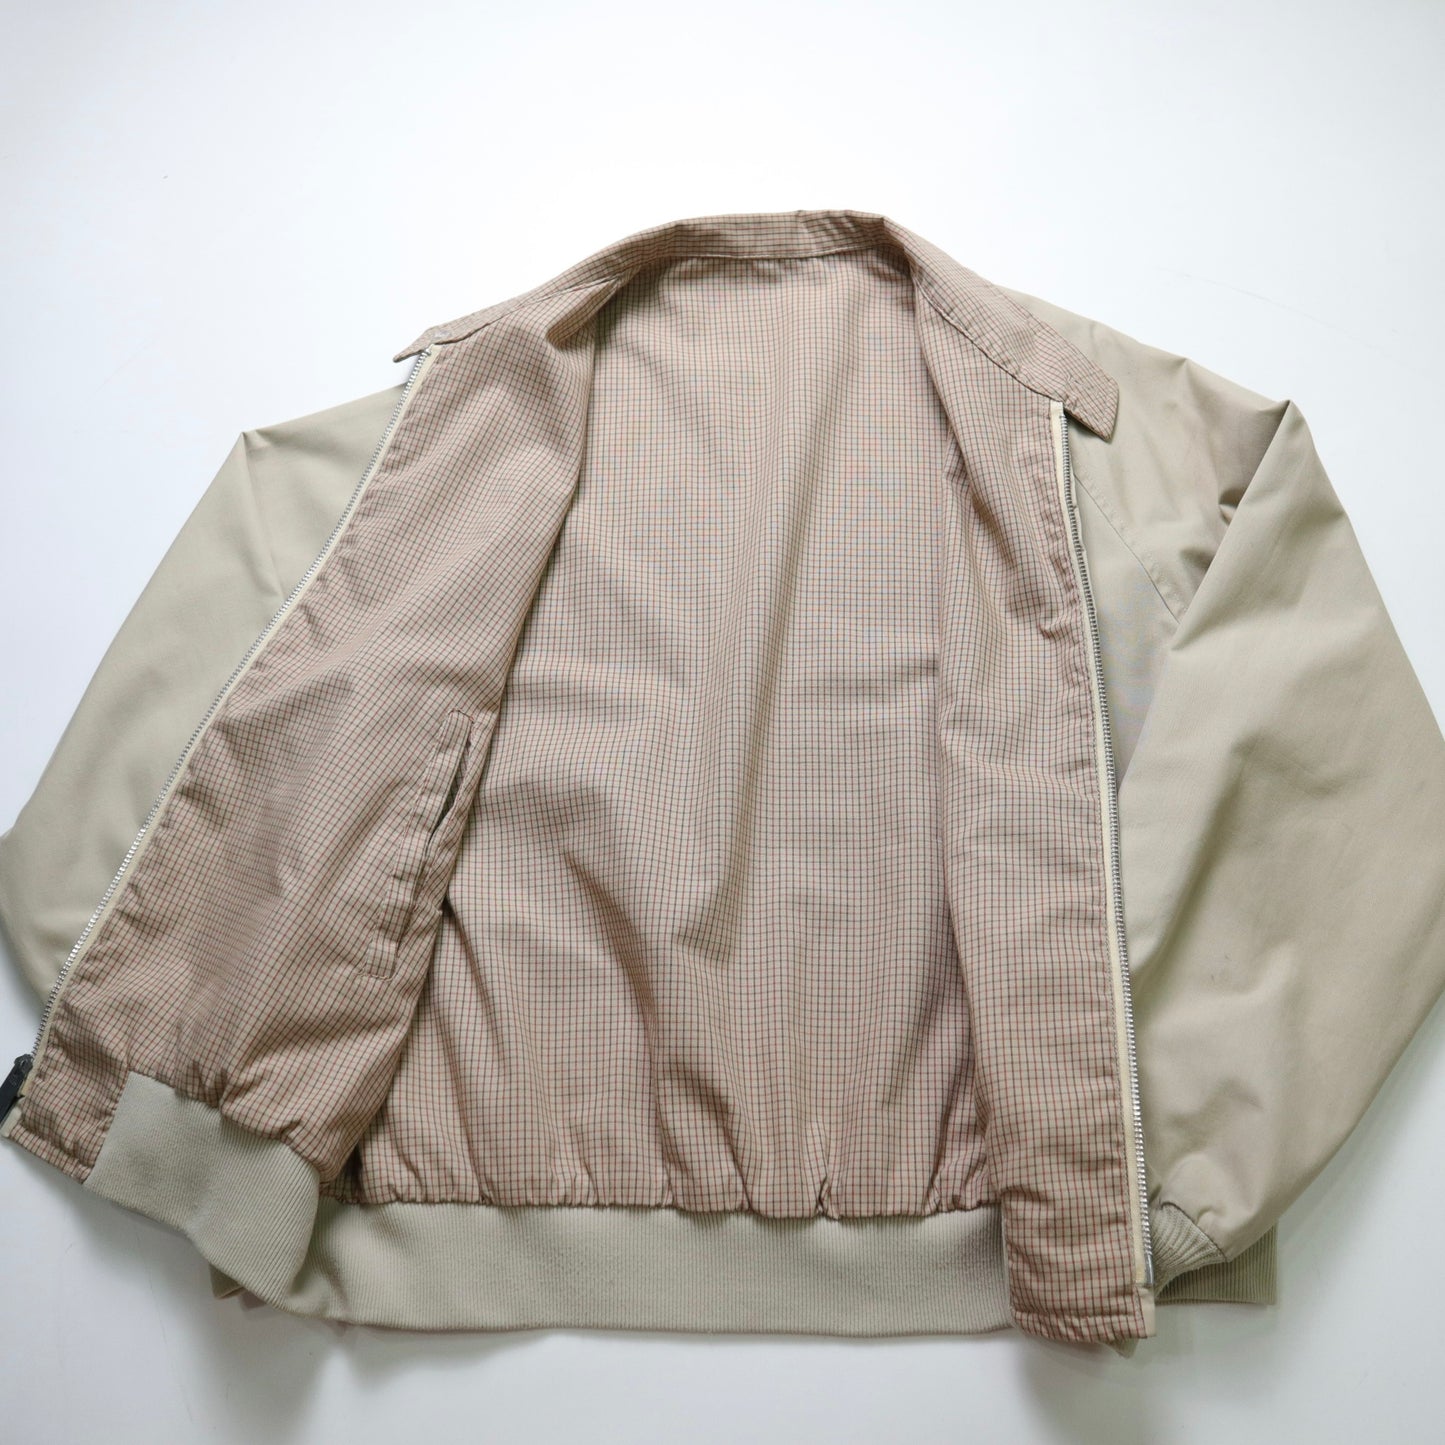 1970s American-made reversible Harrington coat with Talon zipper